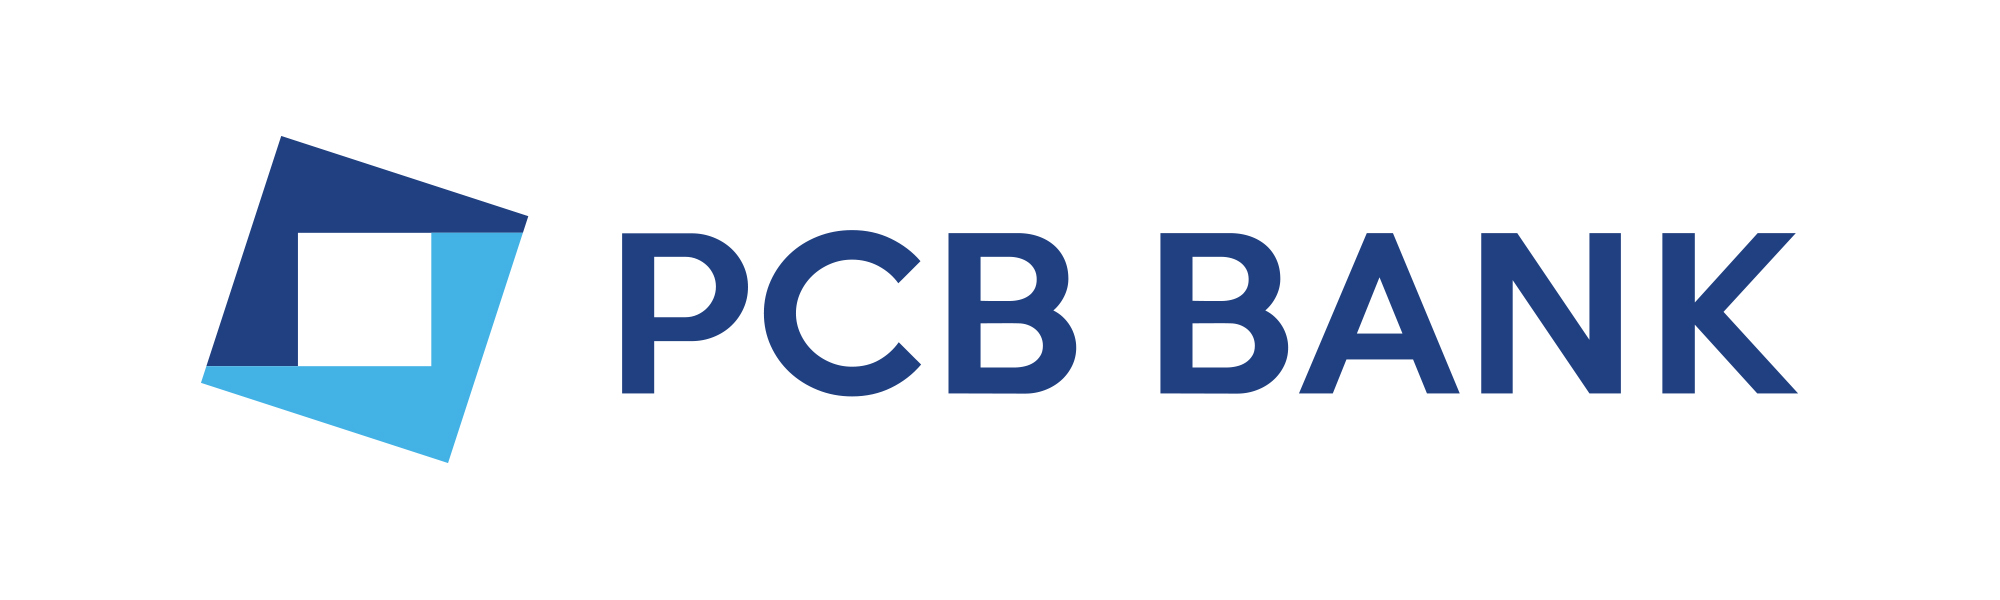 PCB BANK_logo_Horizontal_CMYK